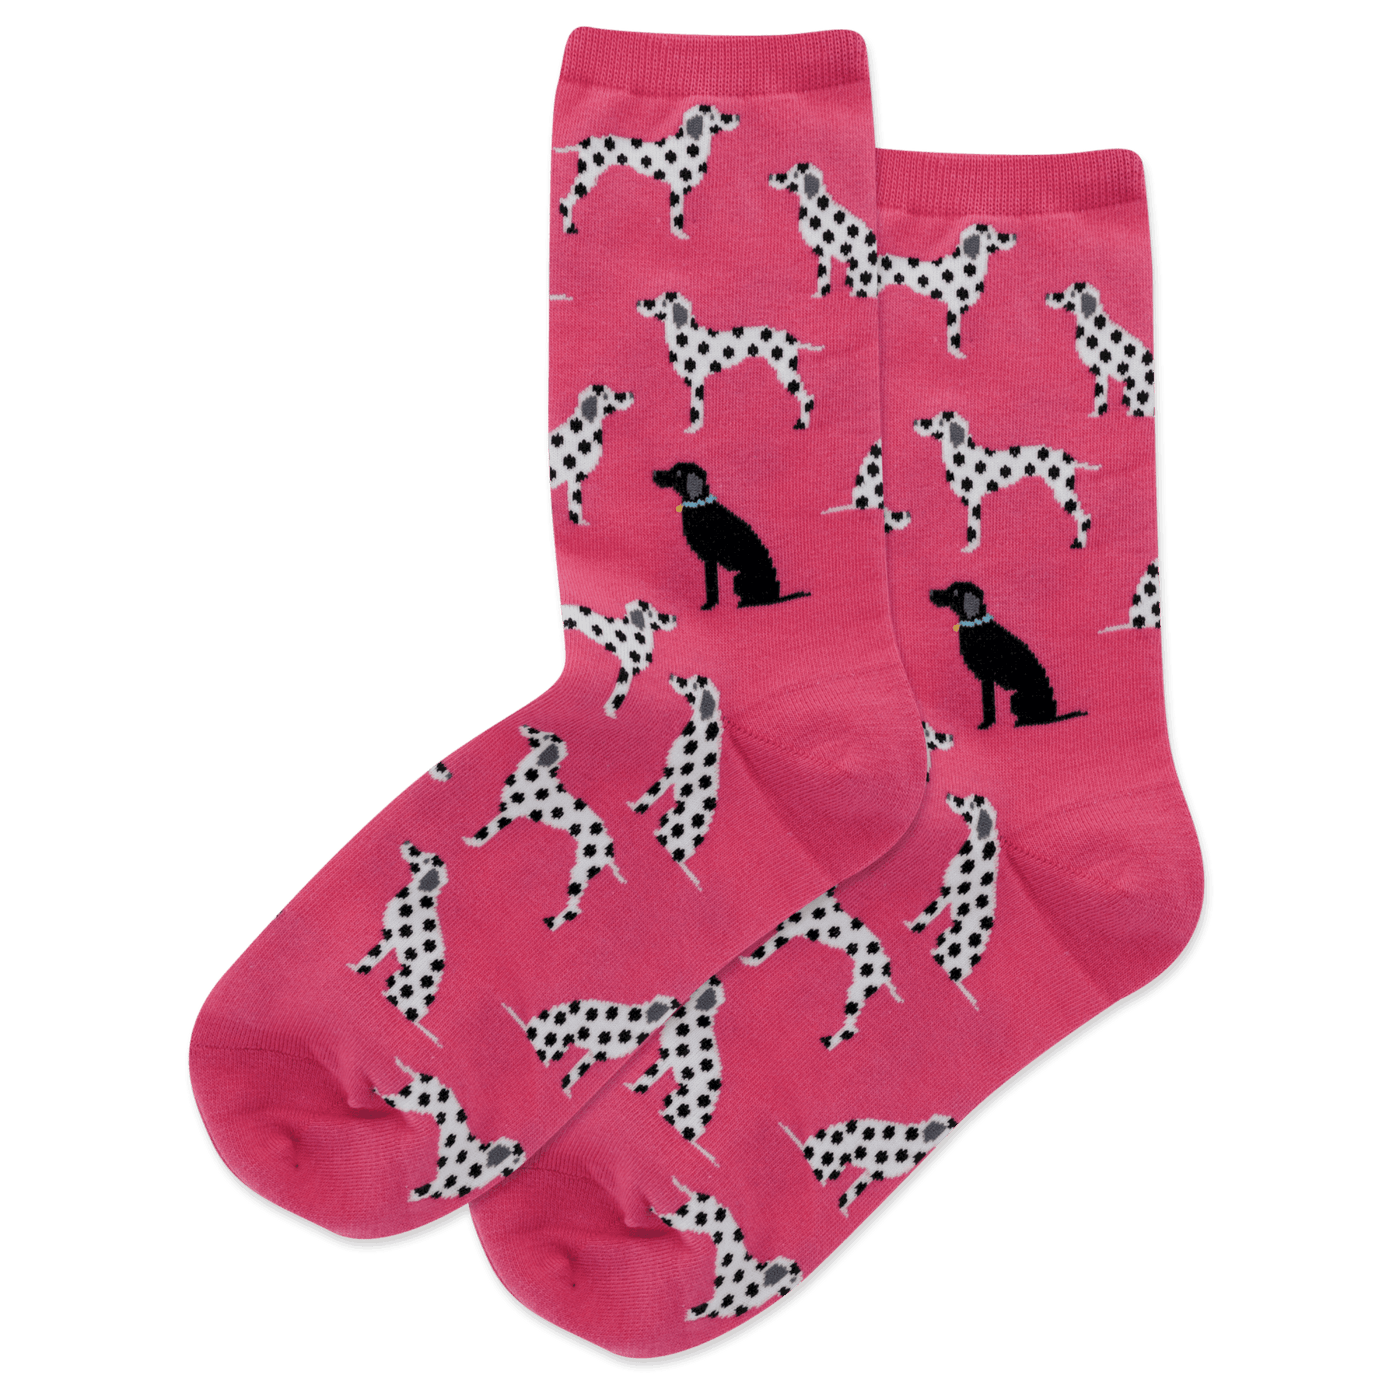 "Dalmatians" Cotton Crew Socks by Hot Sox